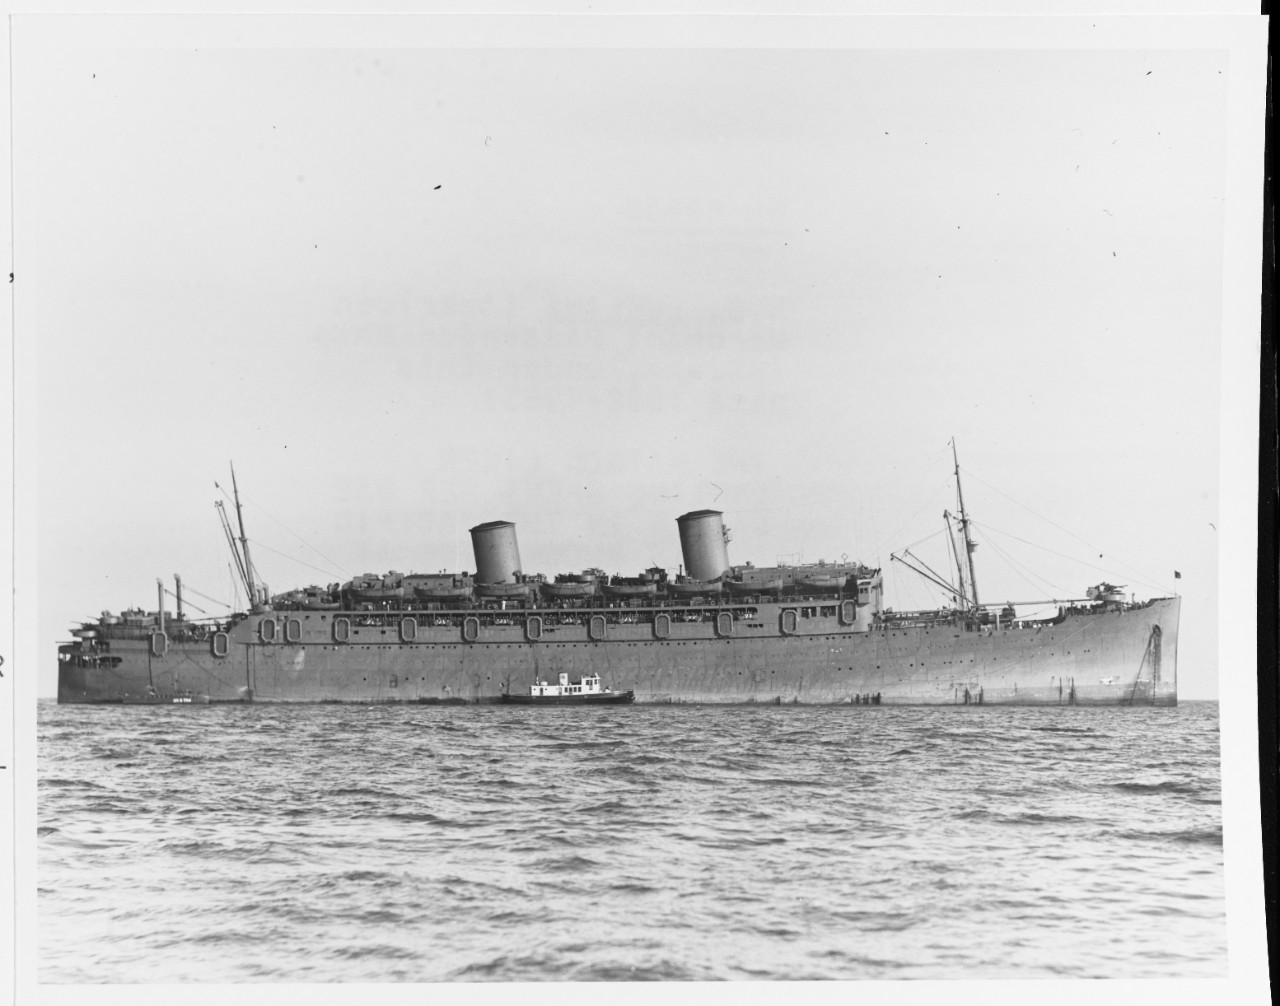 S.S. LURLINE (American Merchant Passenger Ship, 1932-), under this name 1932-1963